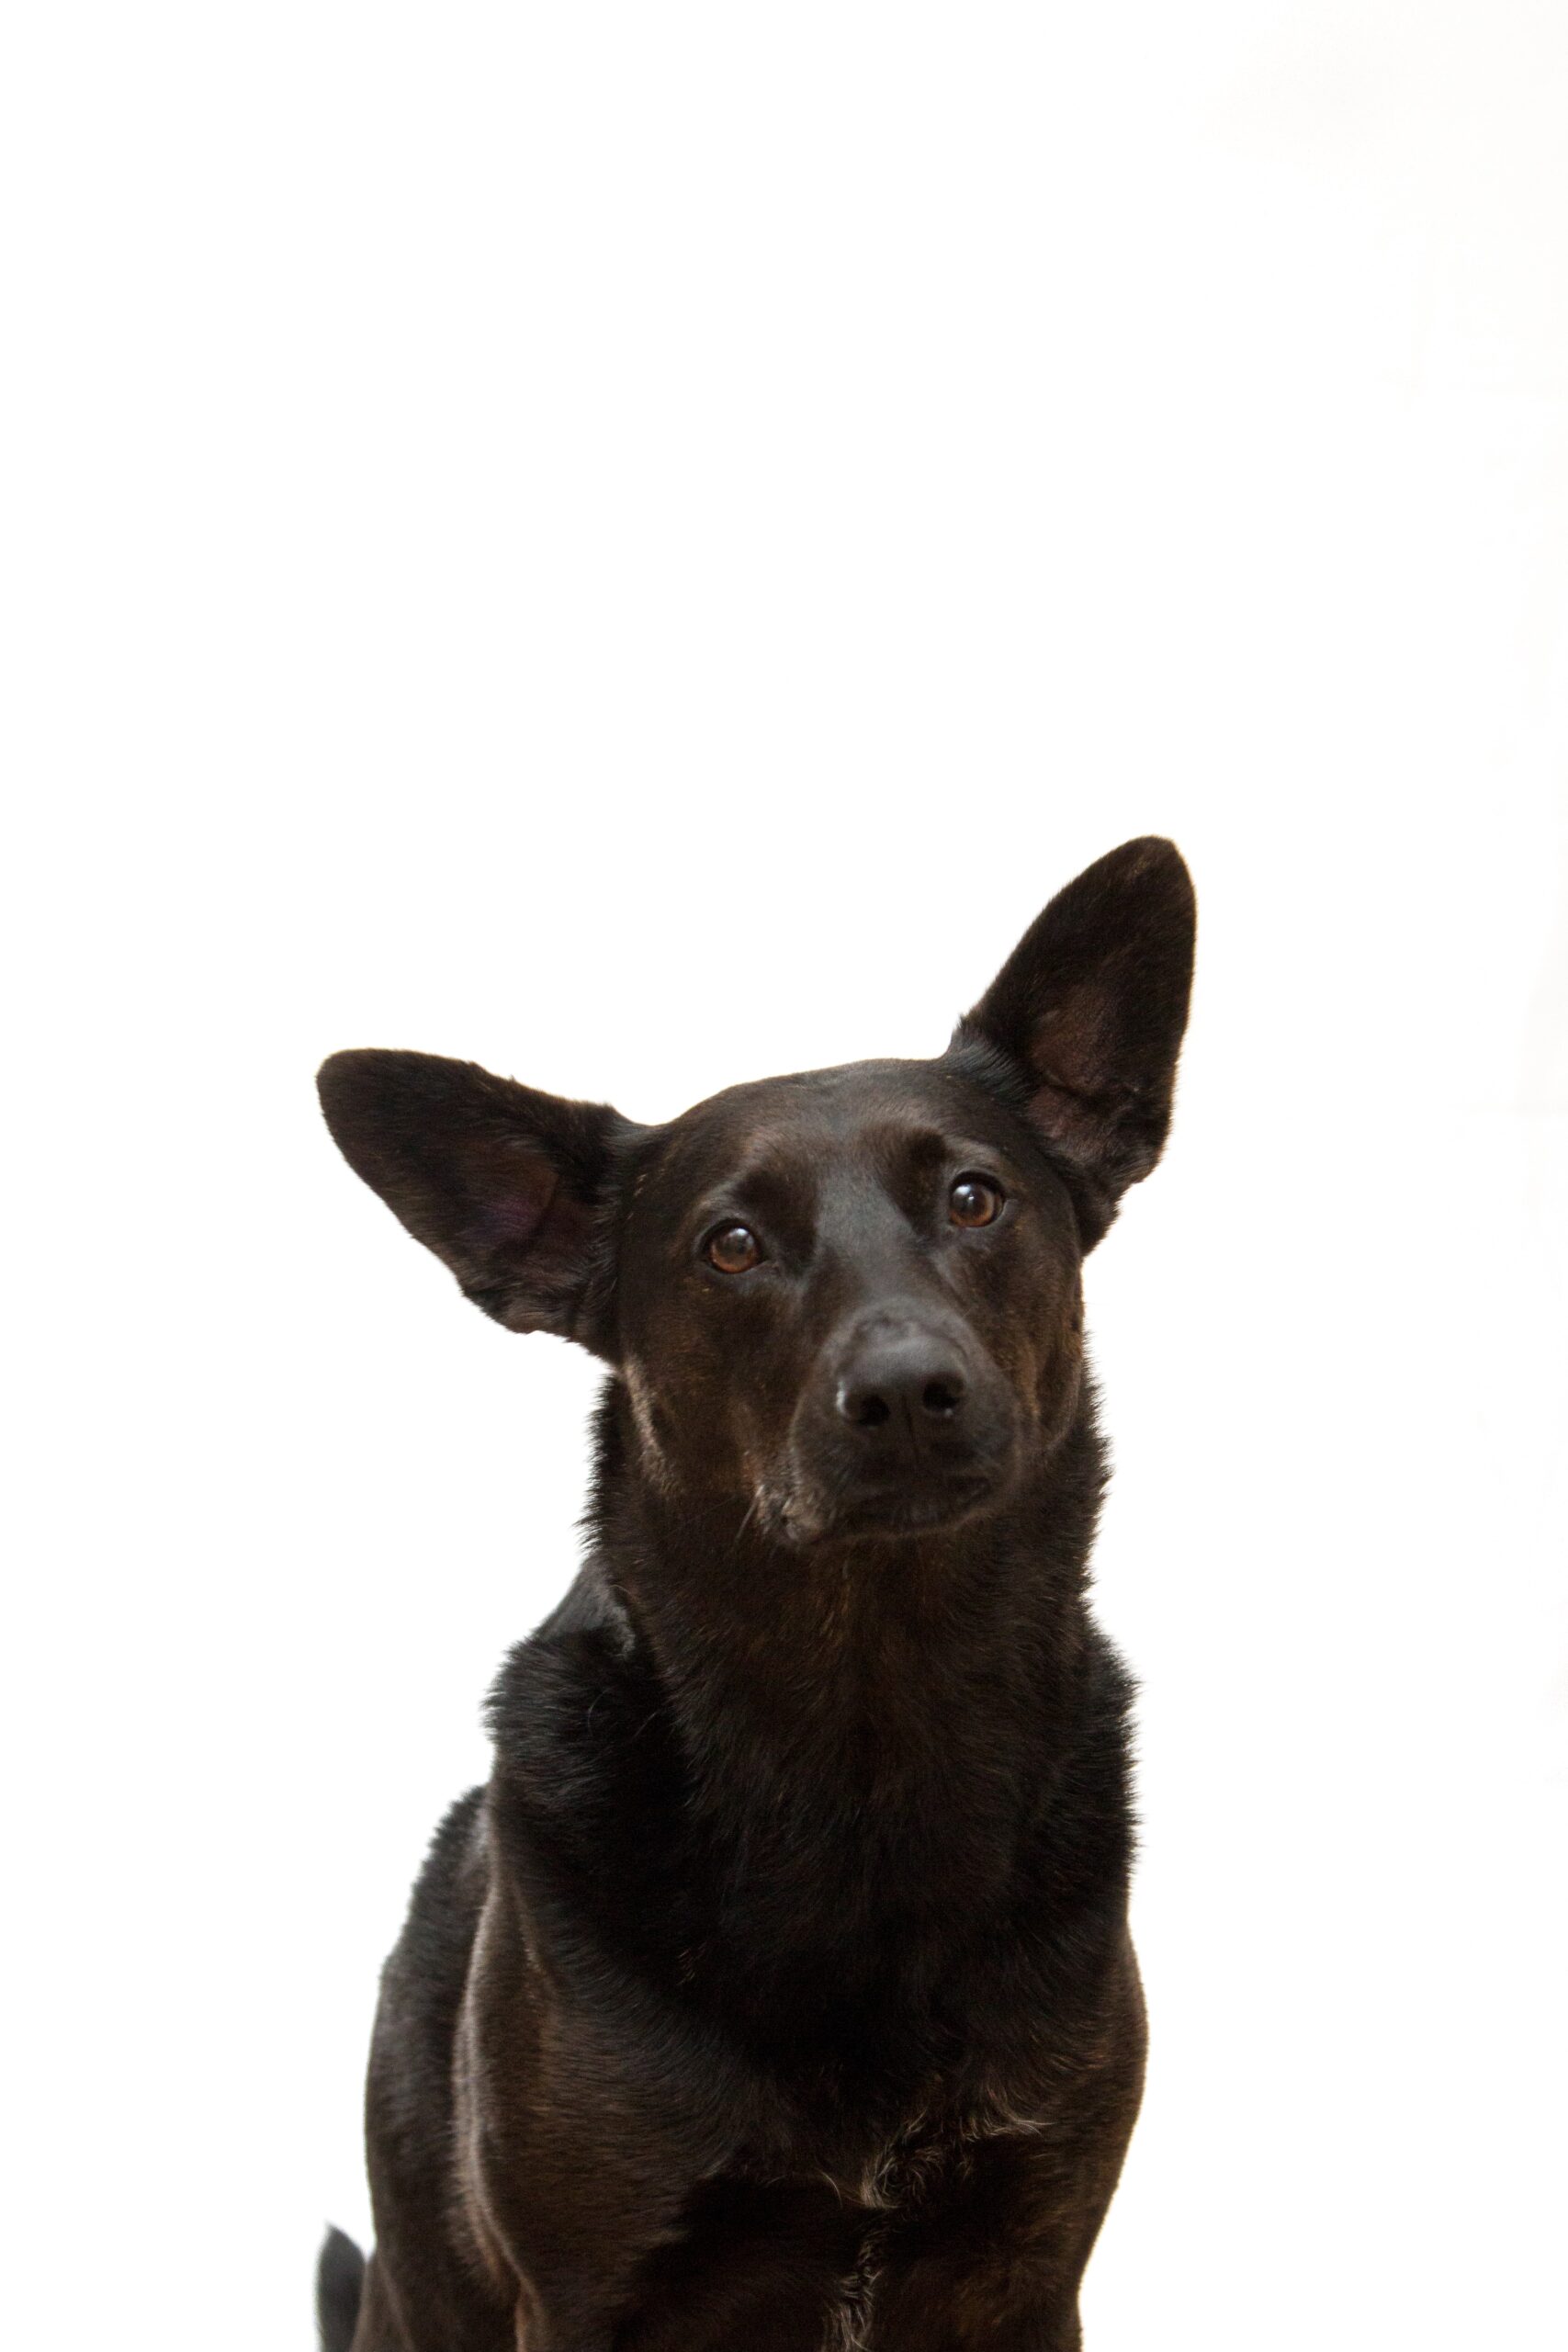 david-lezcano-m-Doa-Black Dog with ears up listening-unsplash (1)